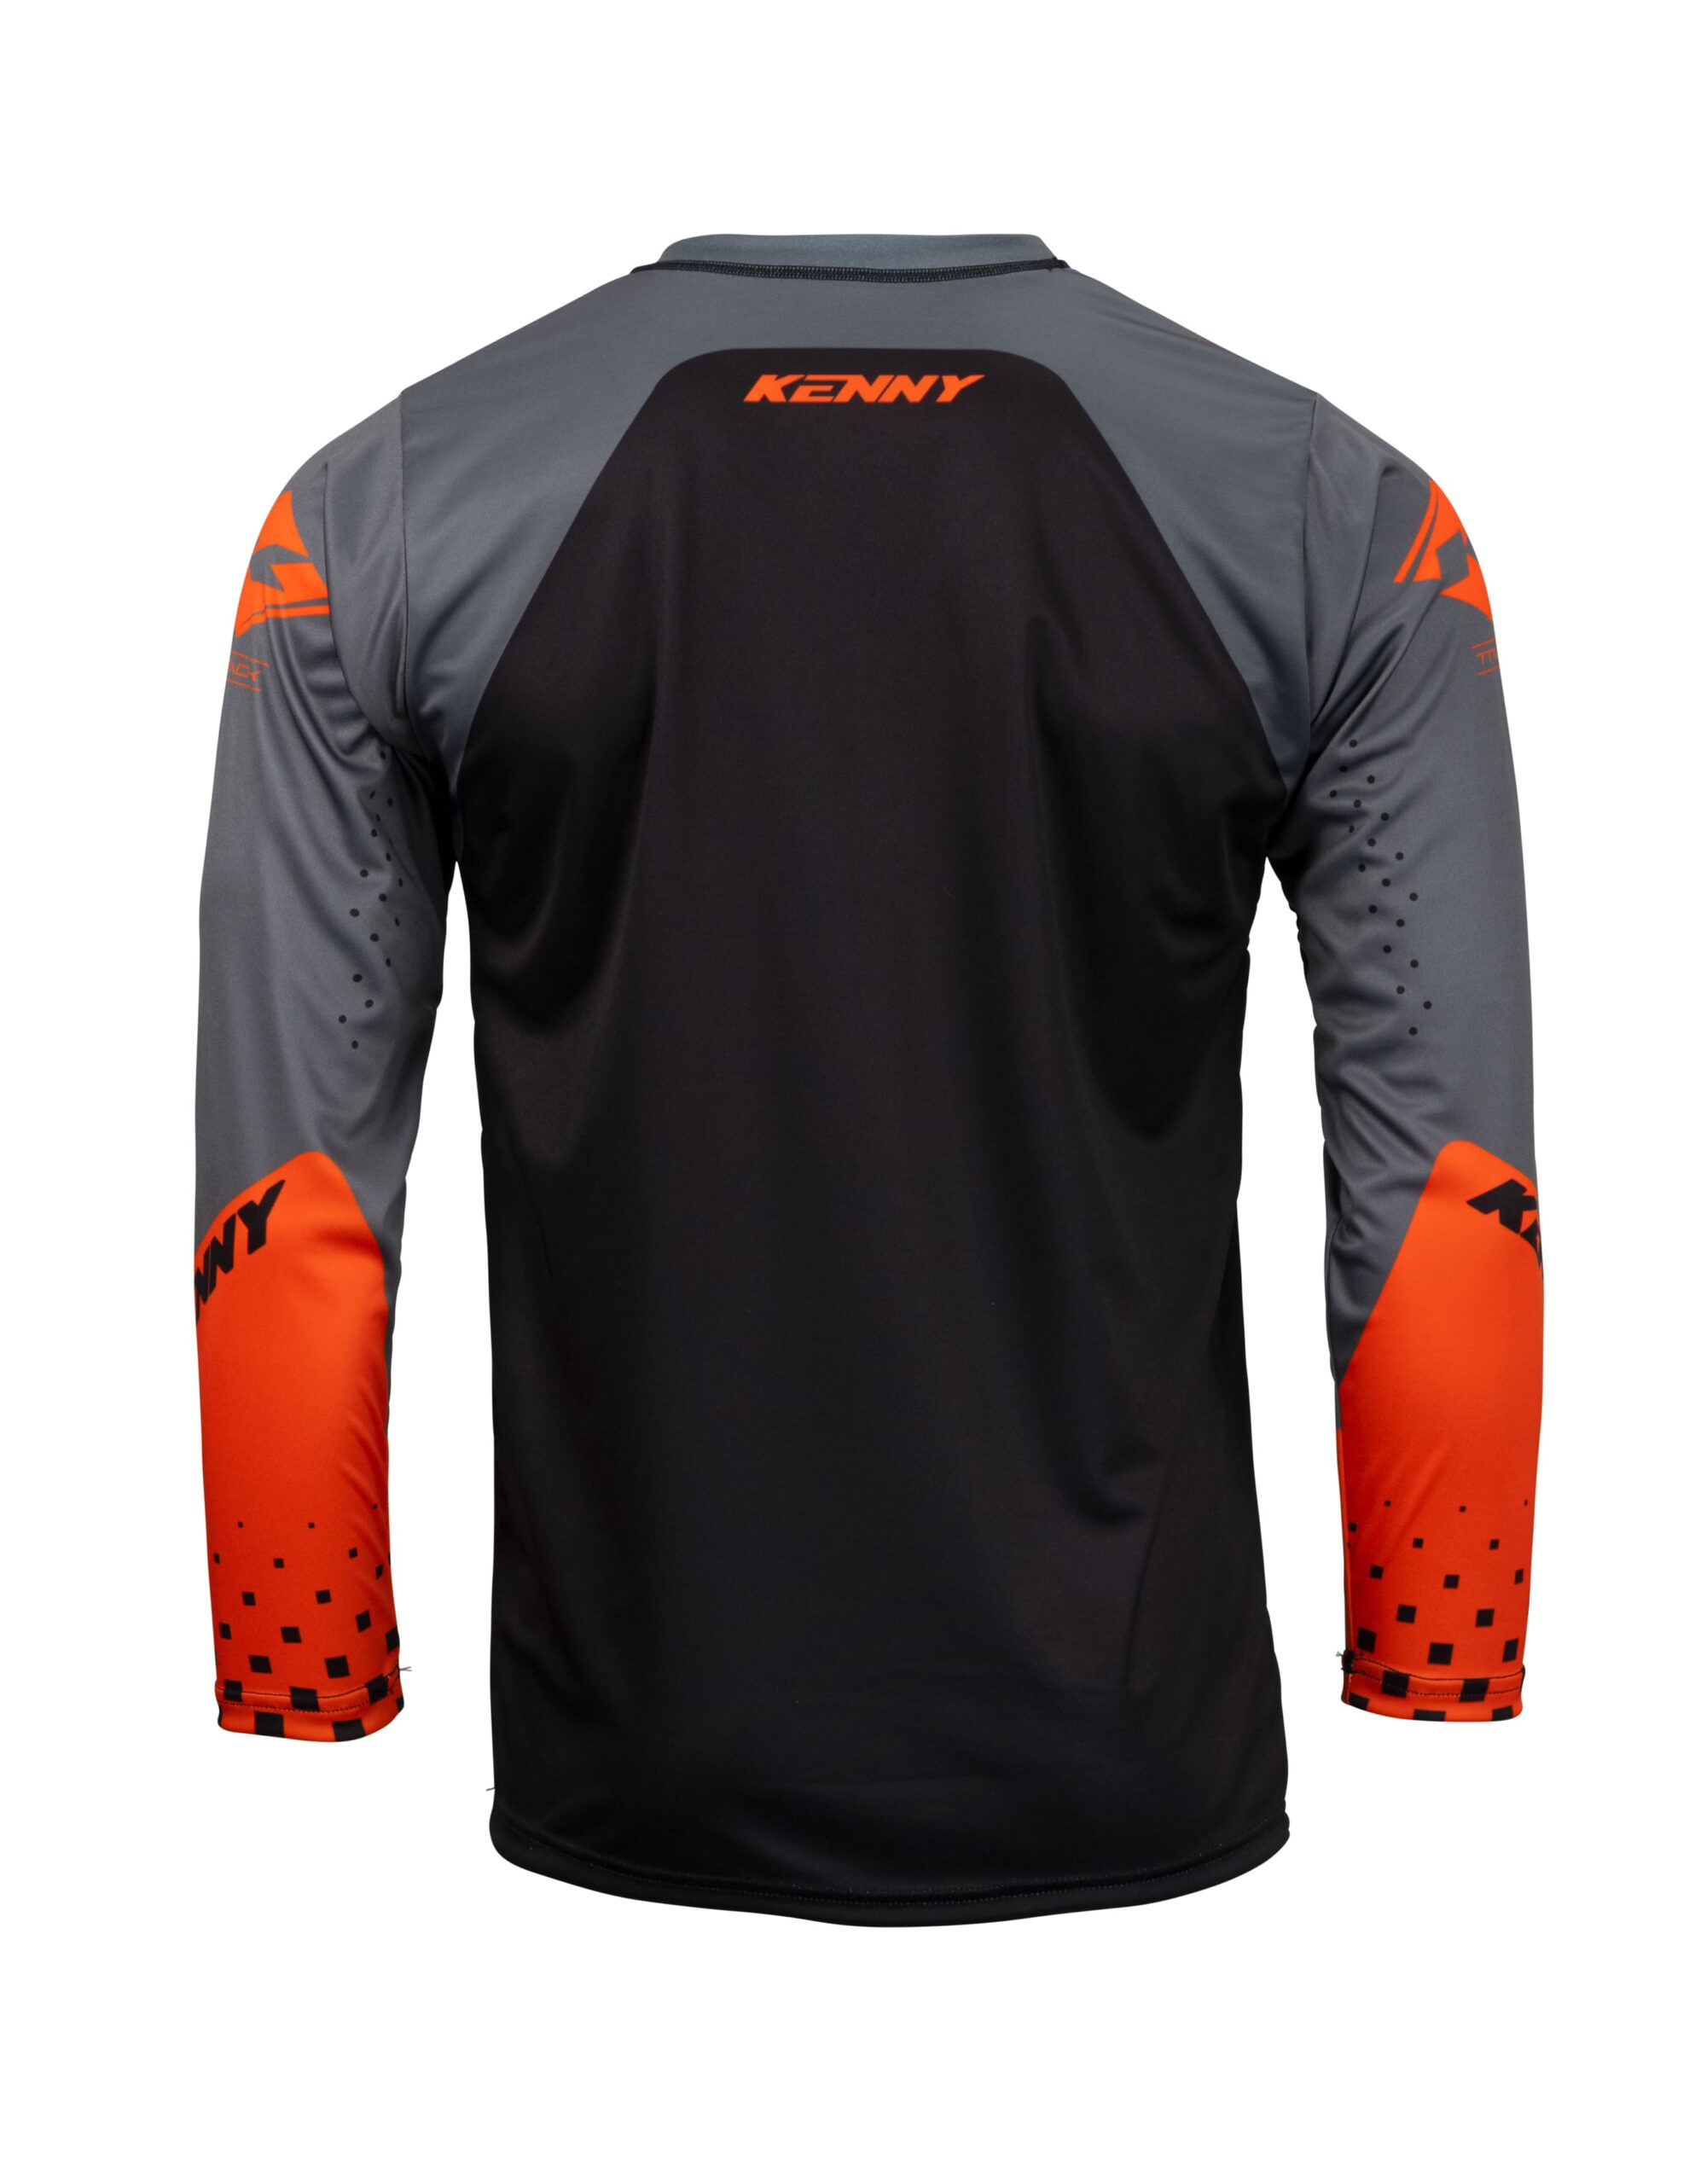 maillot_motocross_kenny_track_focus_orange